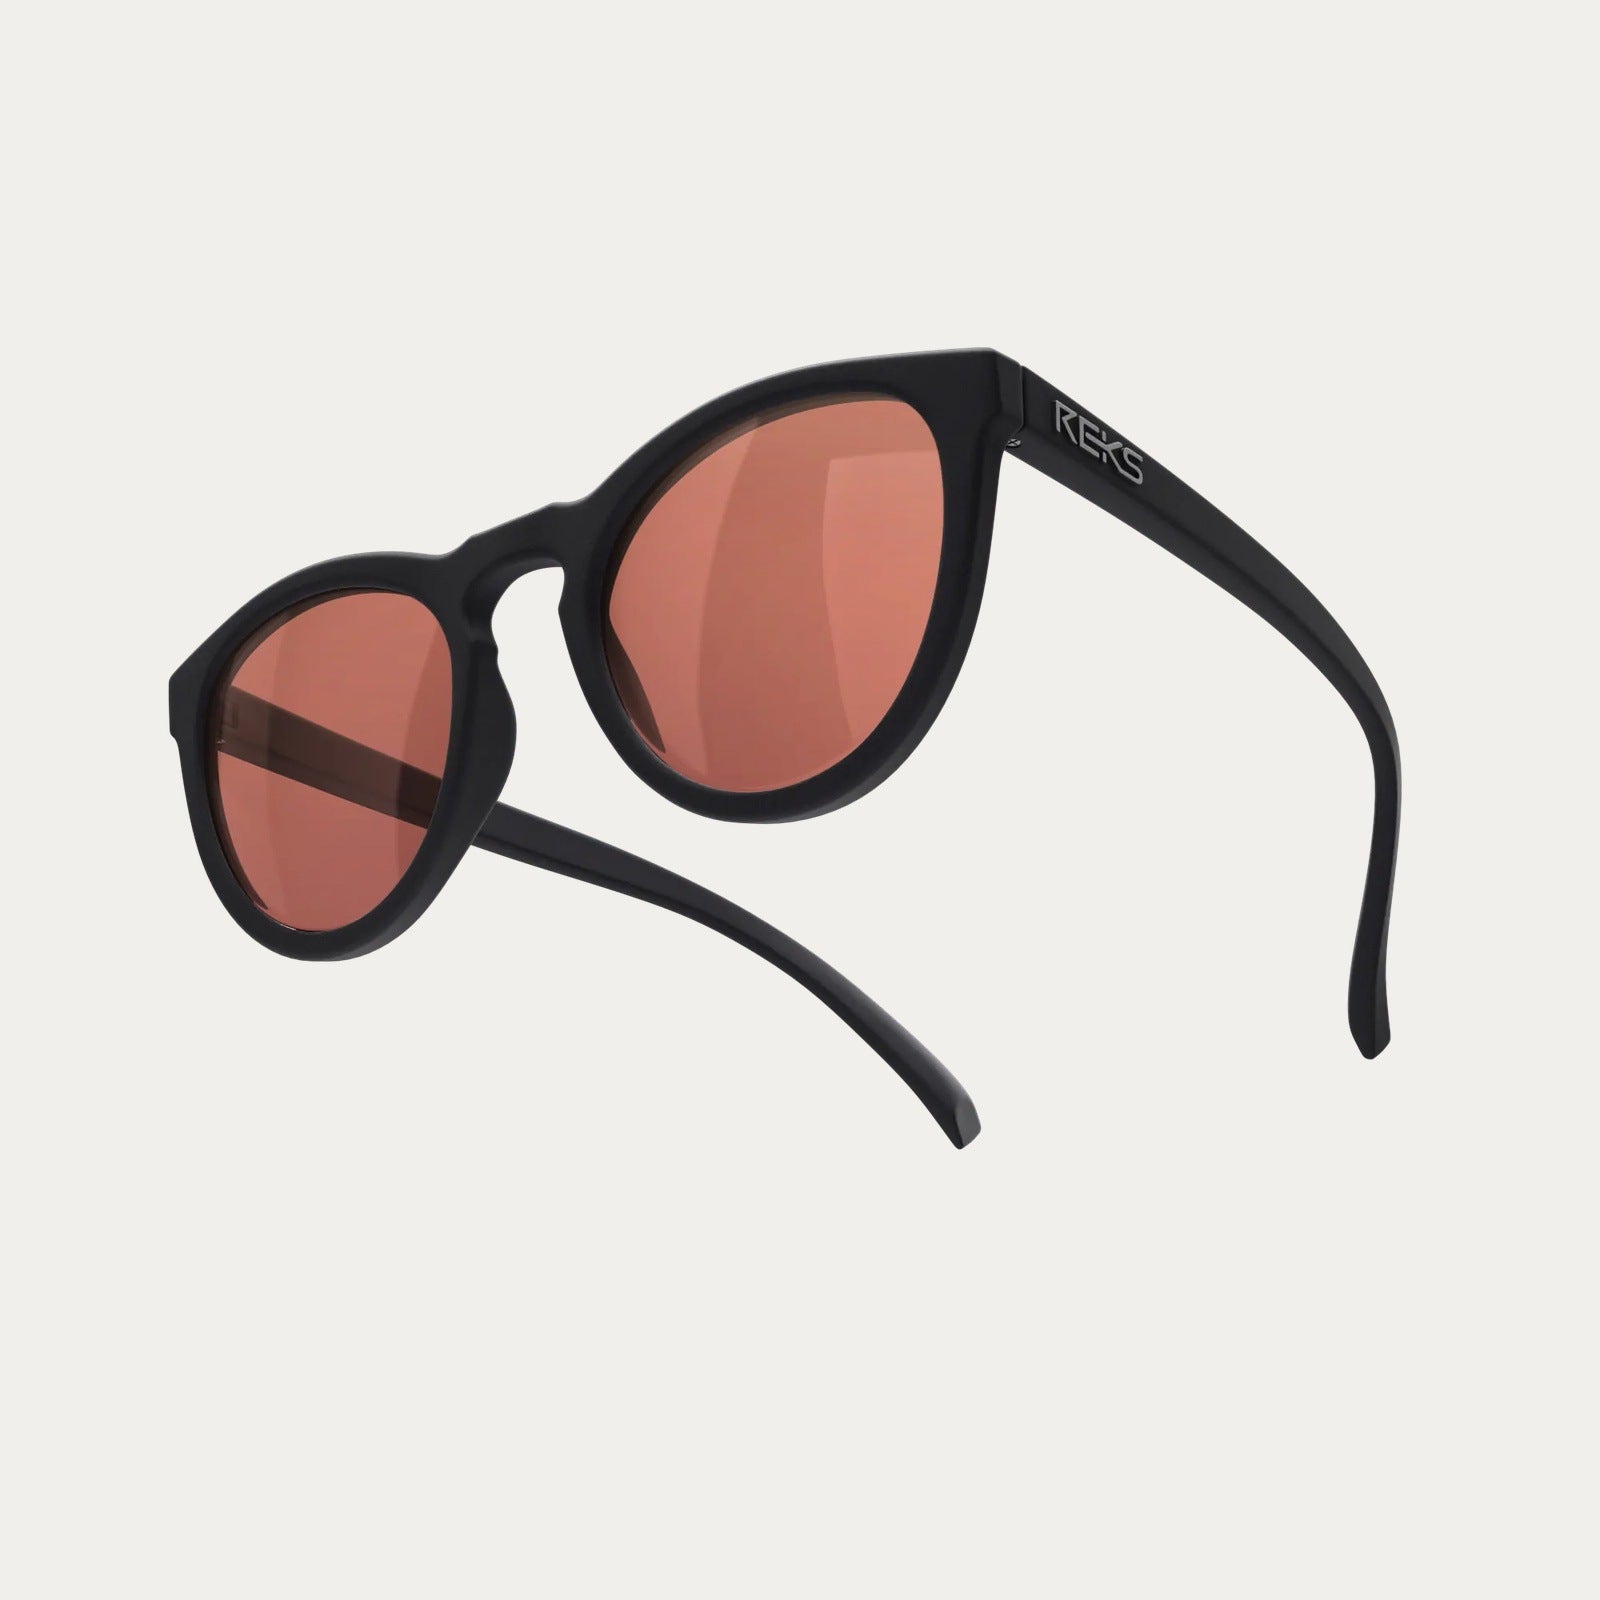 REKS Polarized Round Sunglasses - Unbreakable frame